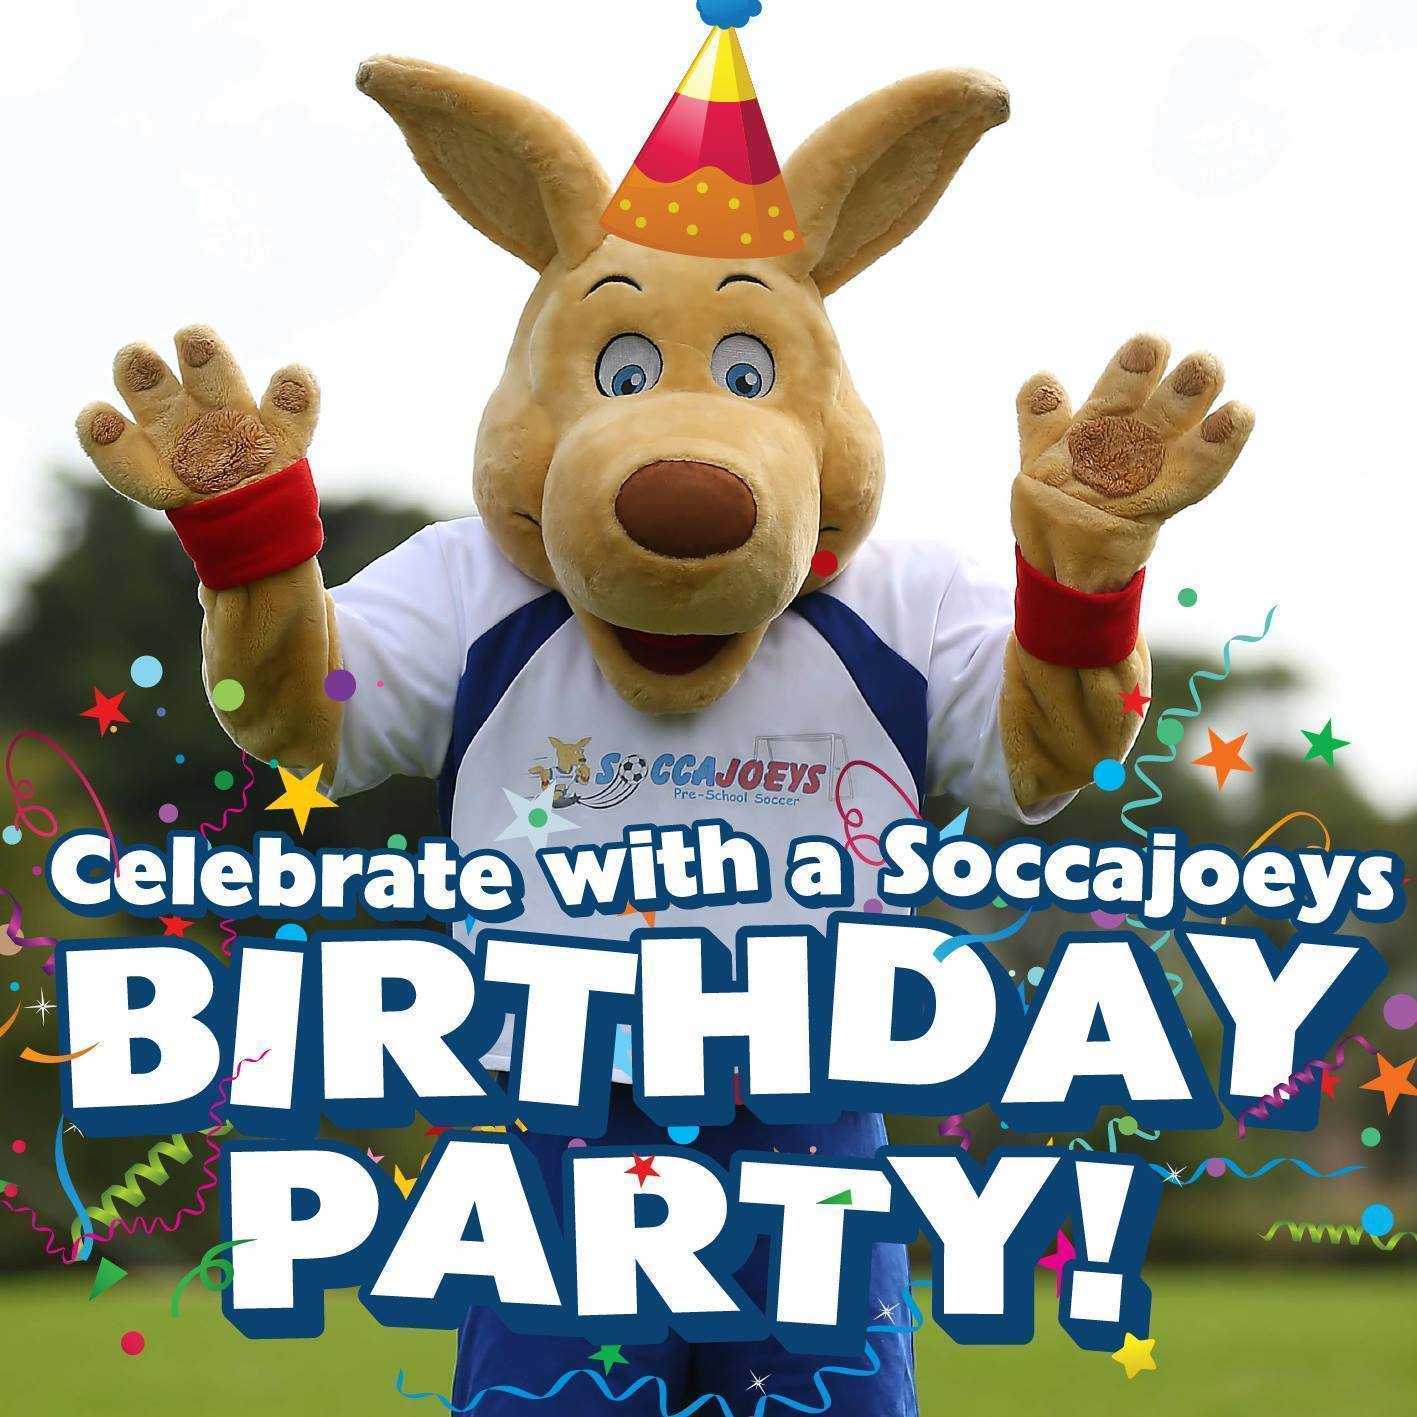 soccajoeys kids soccer birthday party